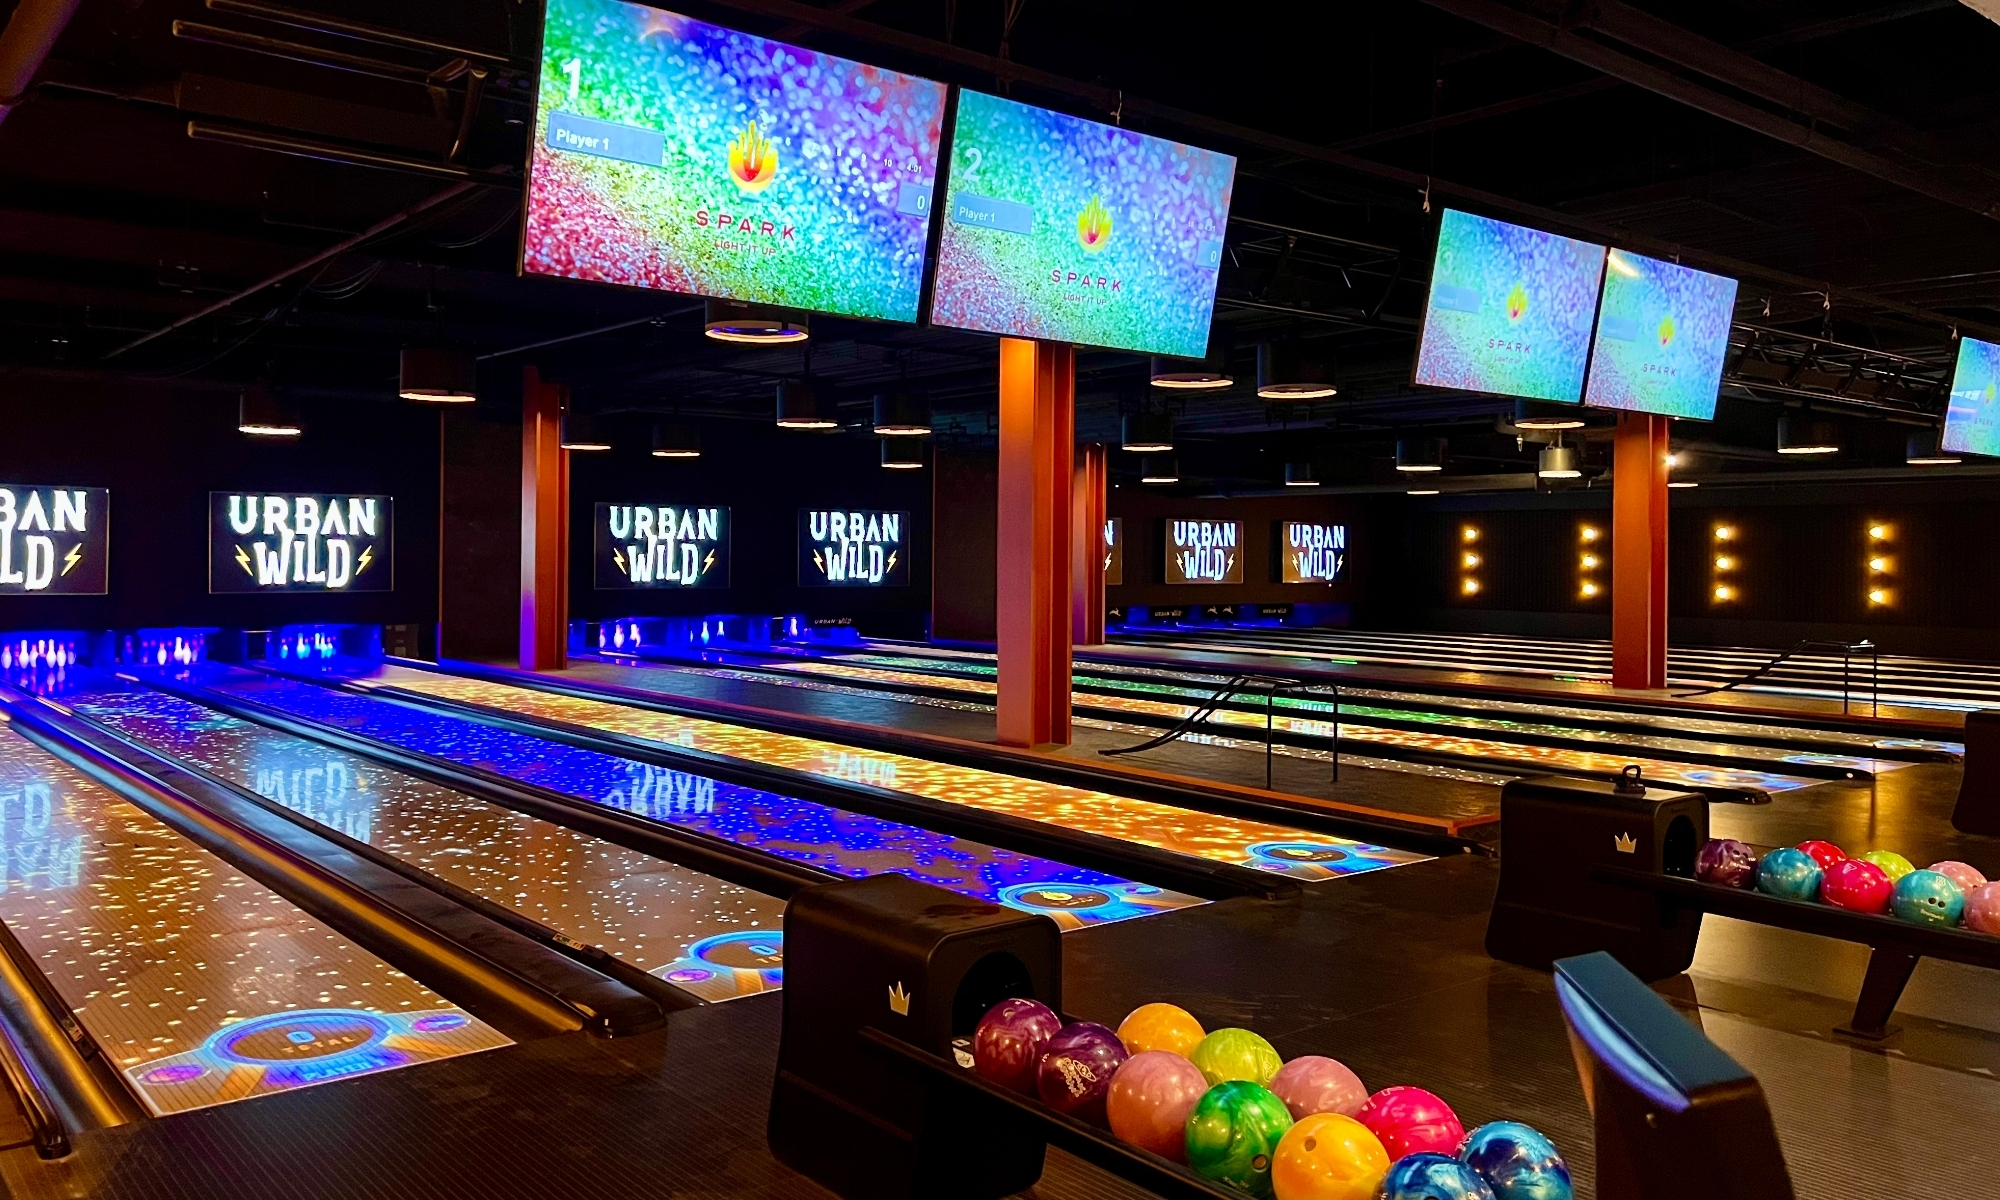 Bowling lanes, Tvs and colorful bowling balls